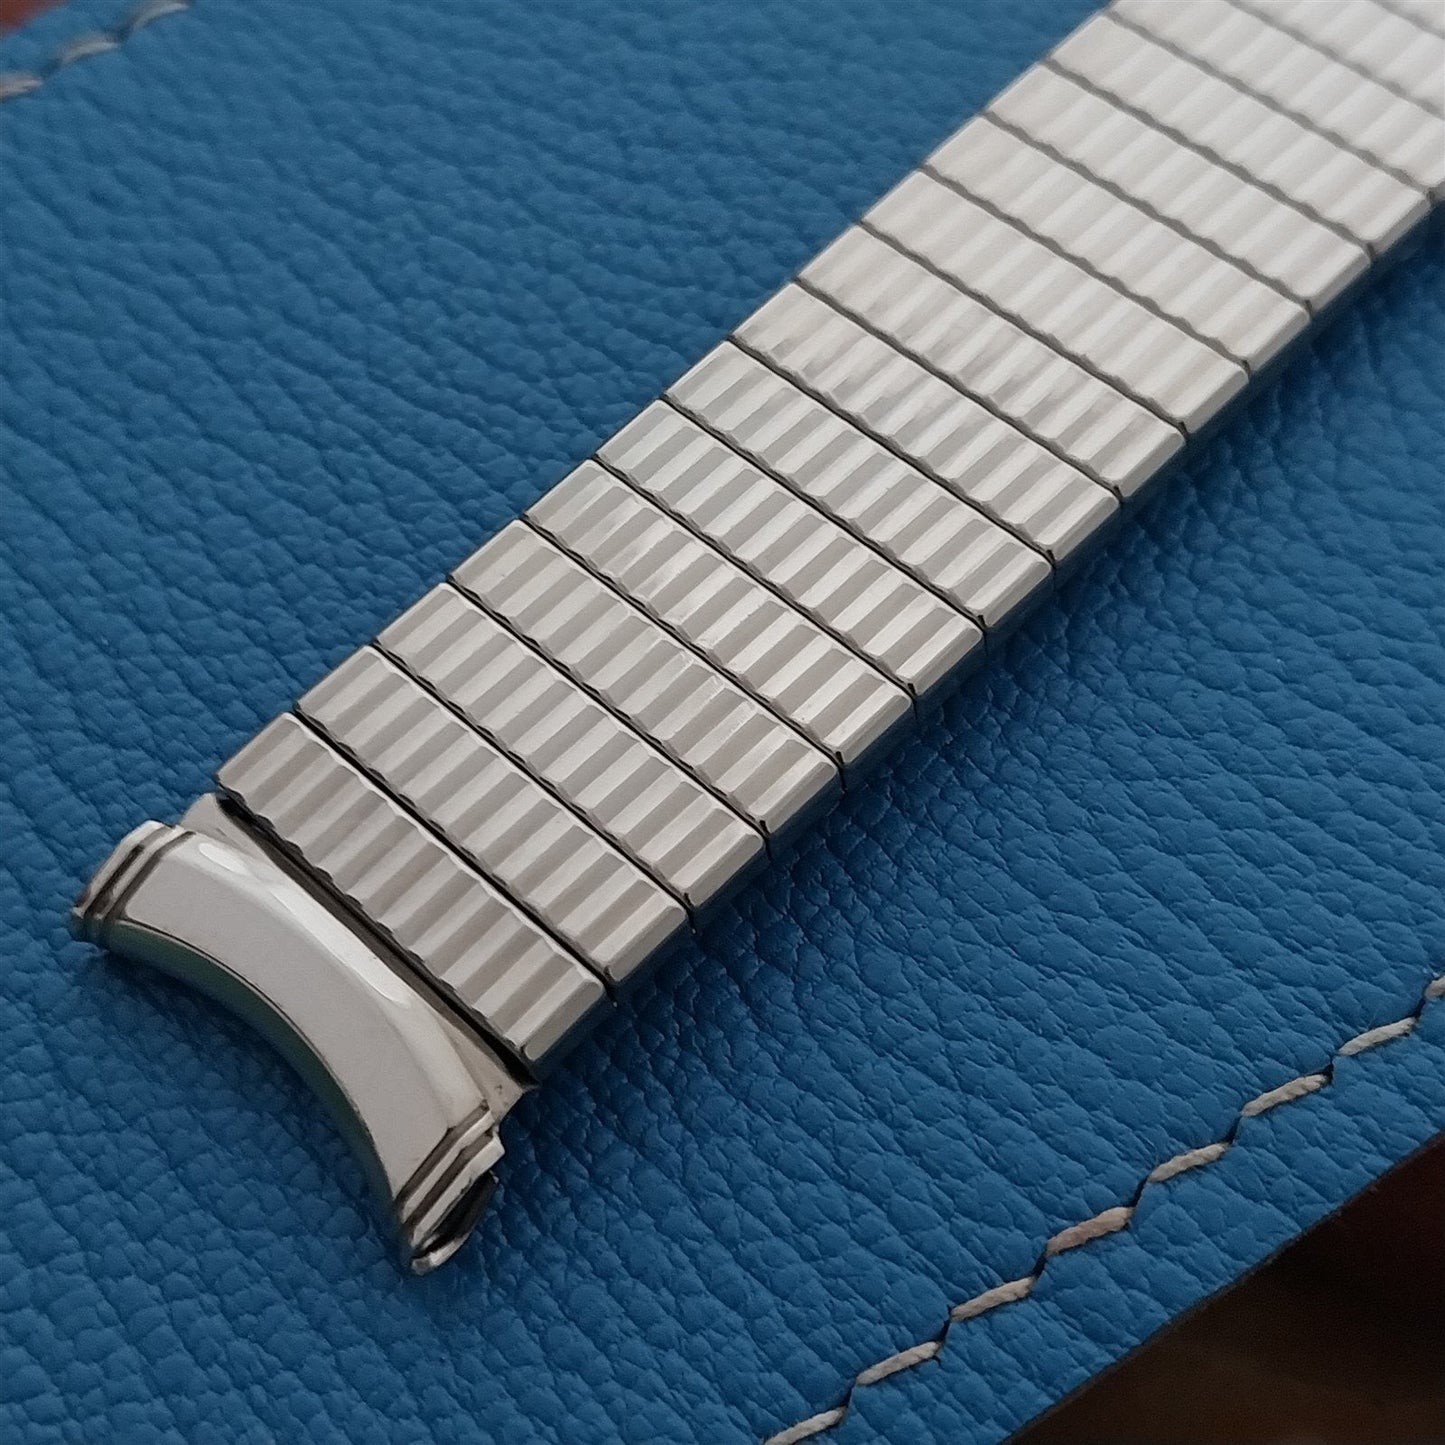 18mm 19mm Stainless Steel Expansion Kreisler USA Unused 1960s Vintage Watch Band